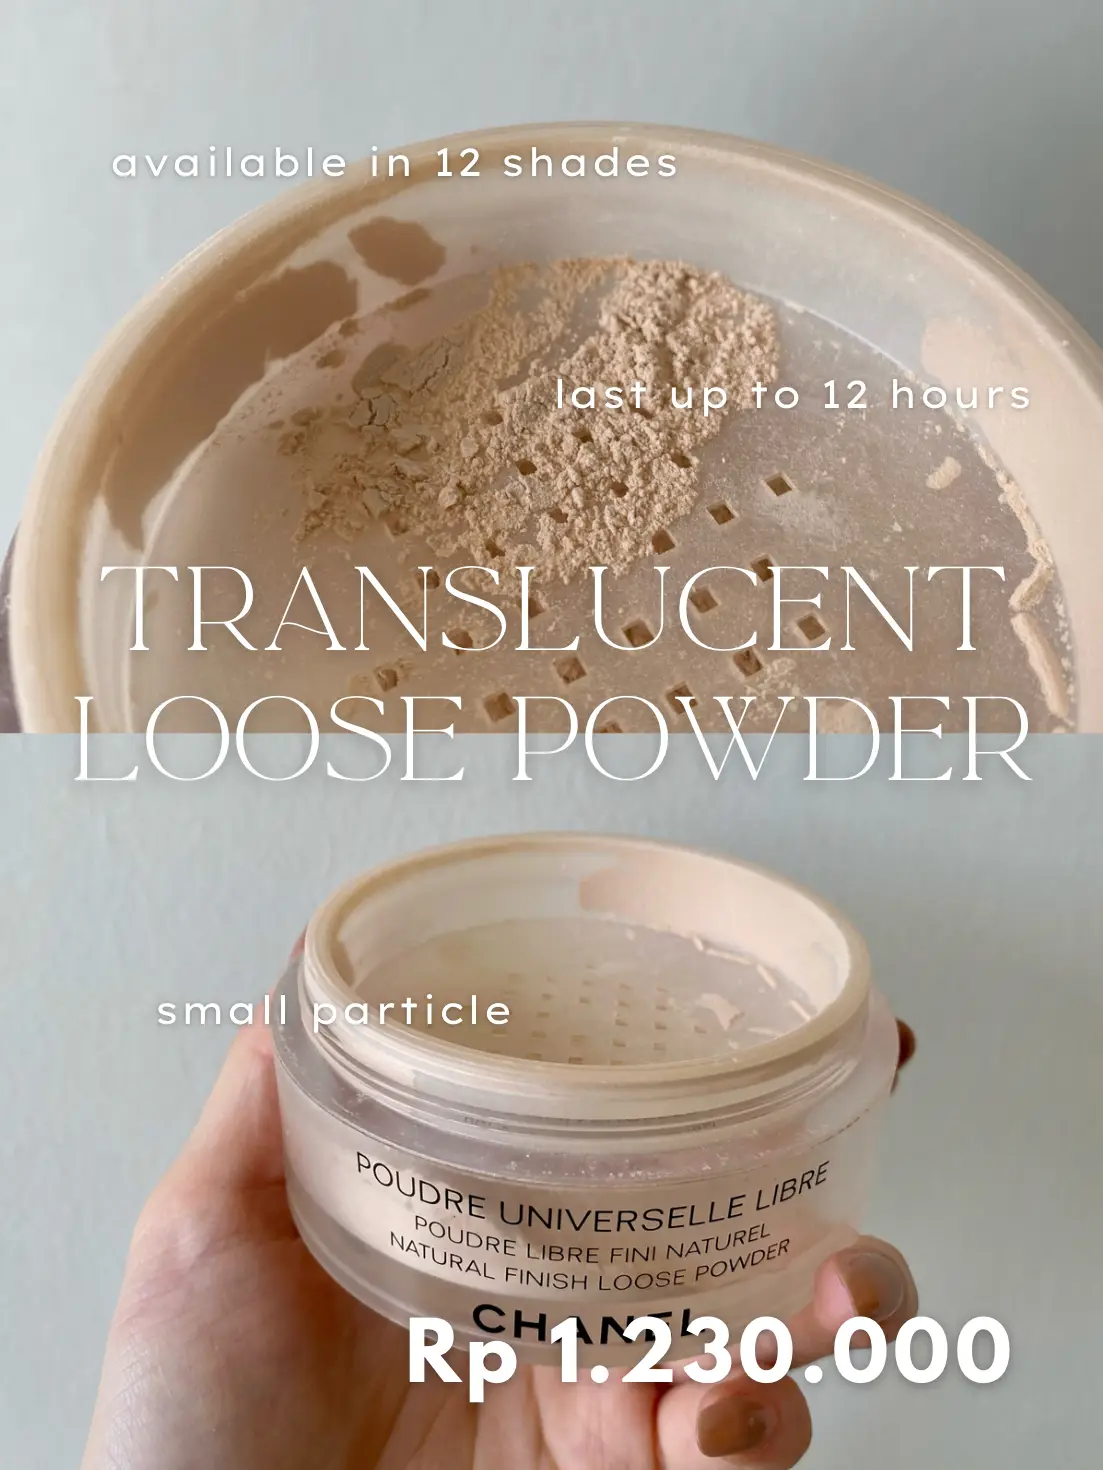 POUDRE UNIVERSELLE LIBRE Natural finish loose powder 12